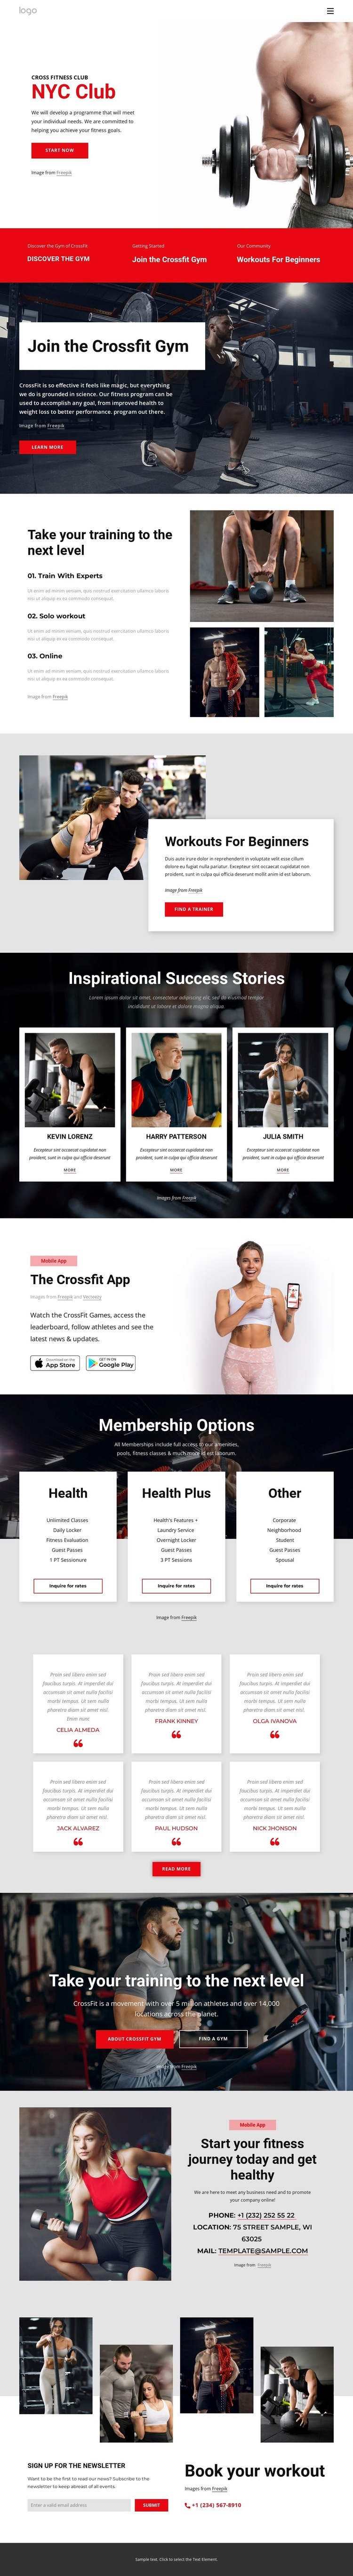 Cross fitness club Homepage Design